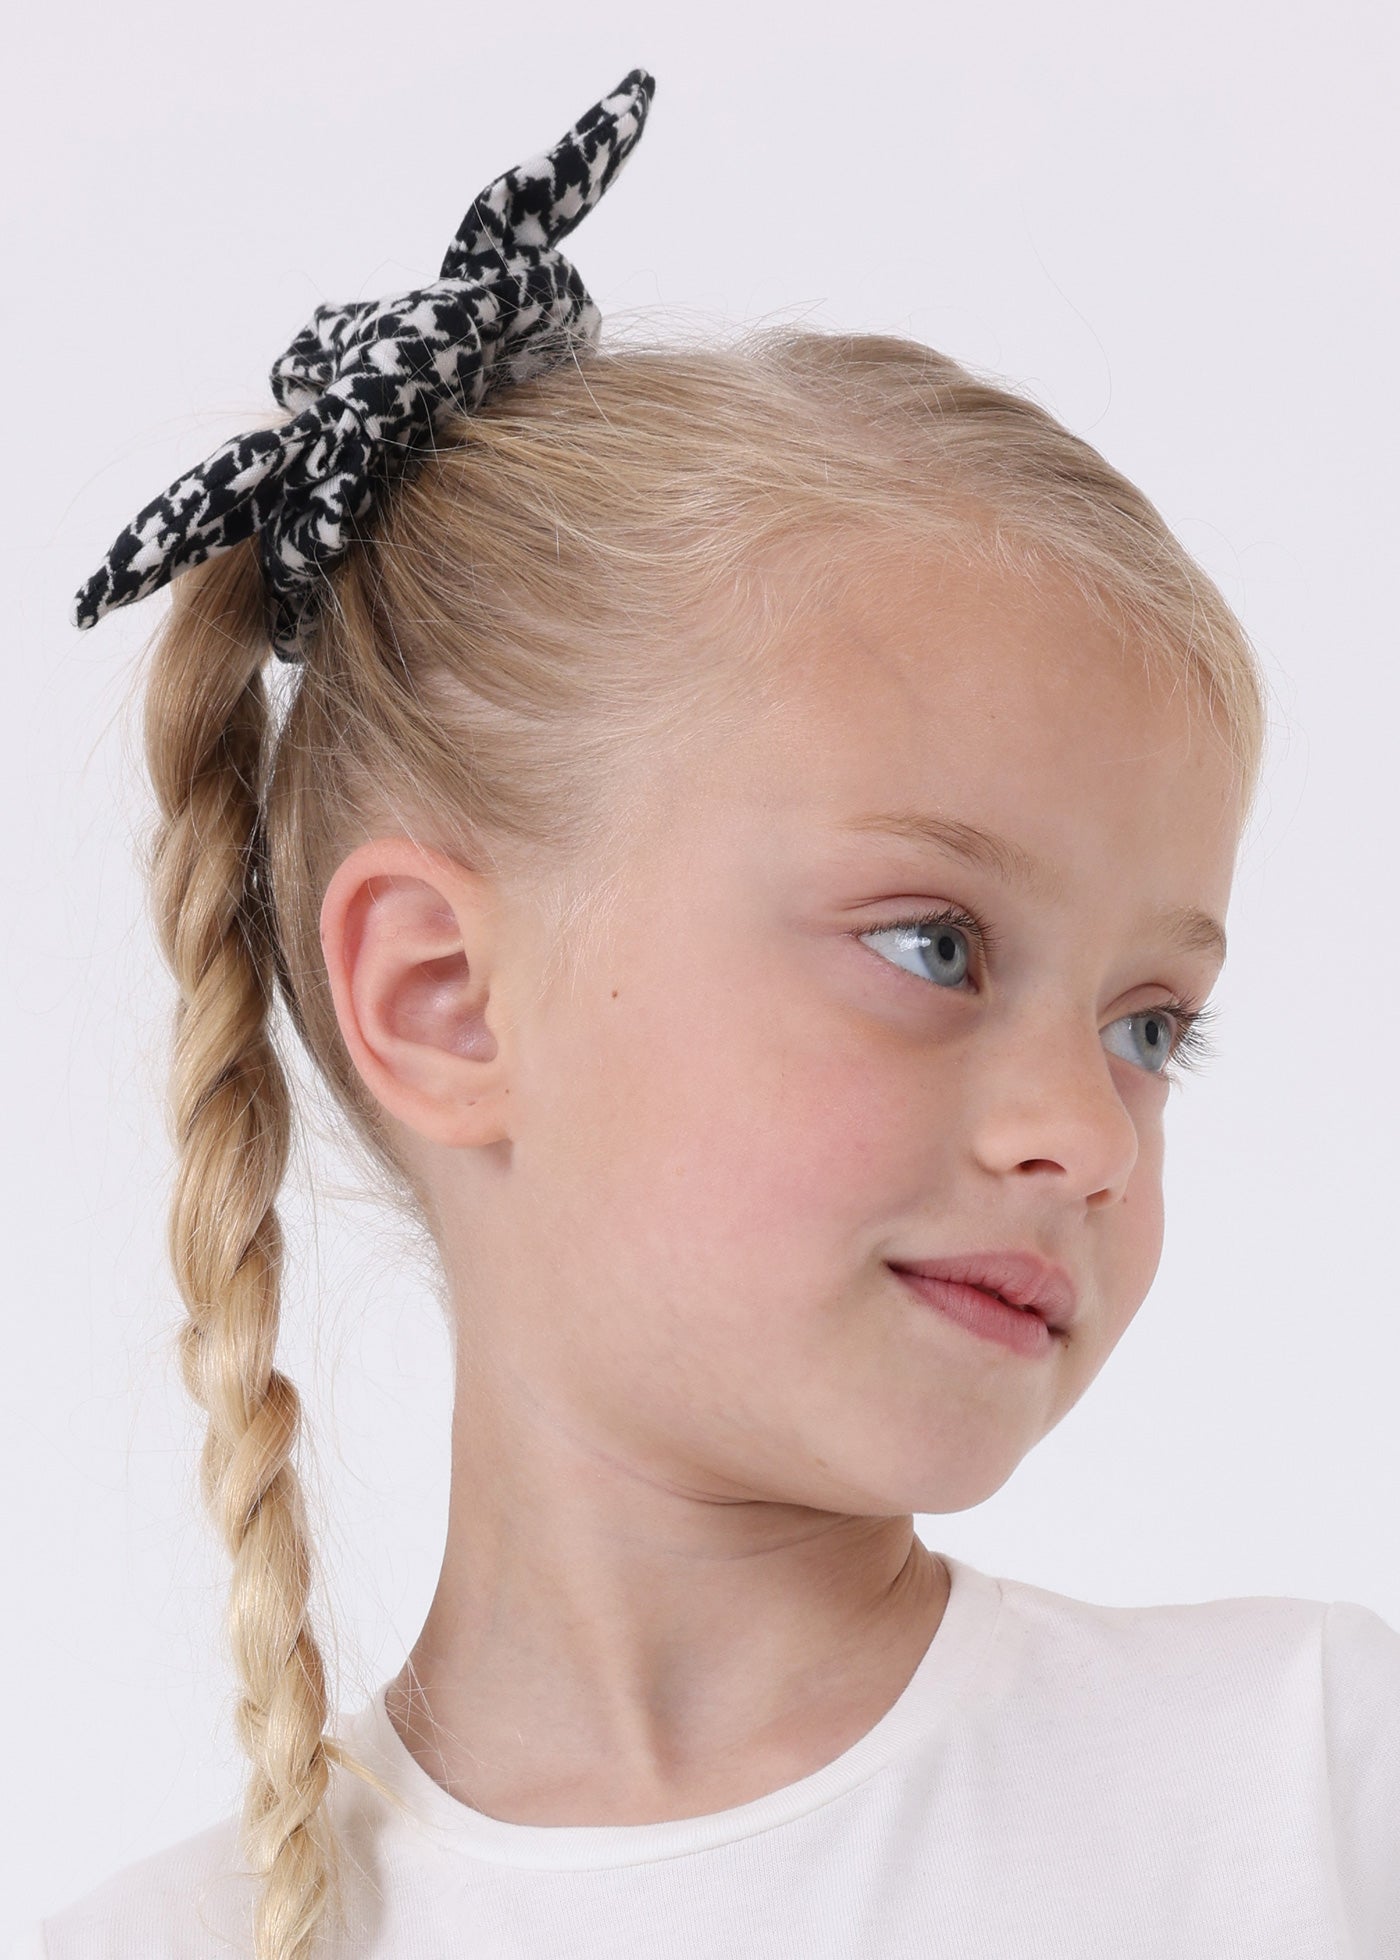 Mayoral Mini White Bows Graphic Shirt & Hair Scrunchie Set _4006-46